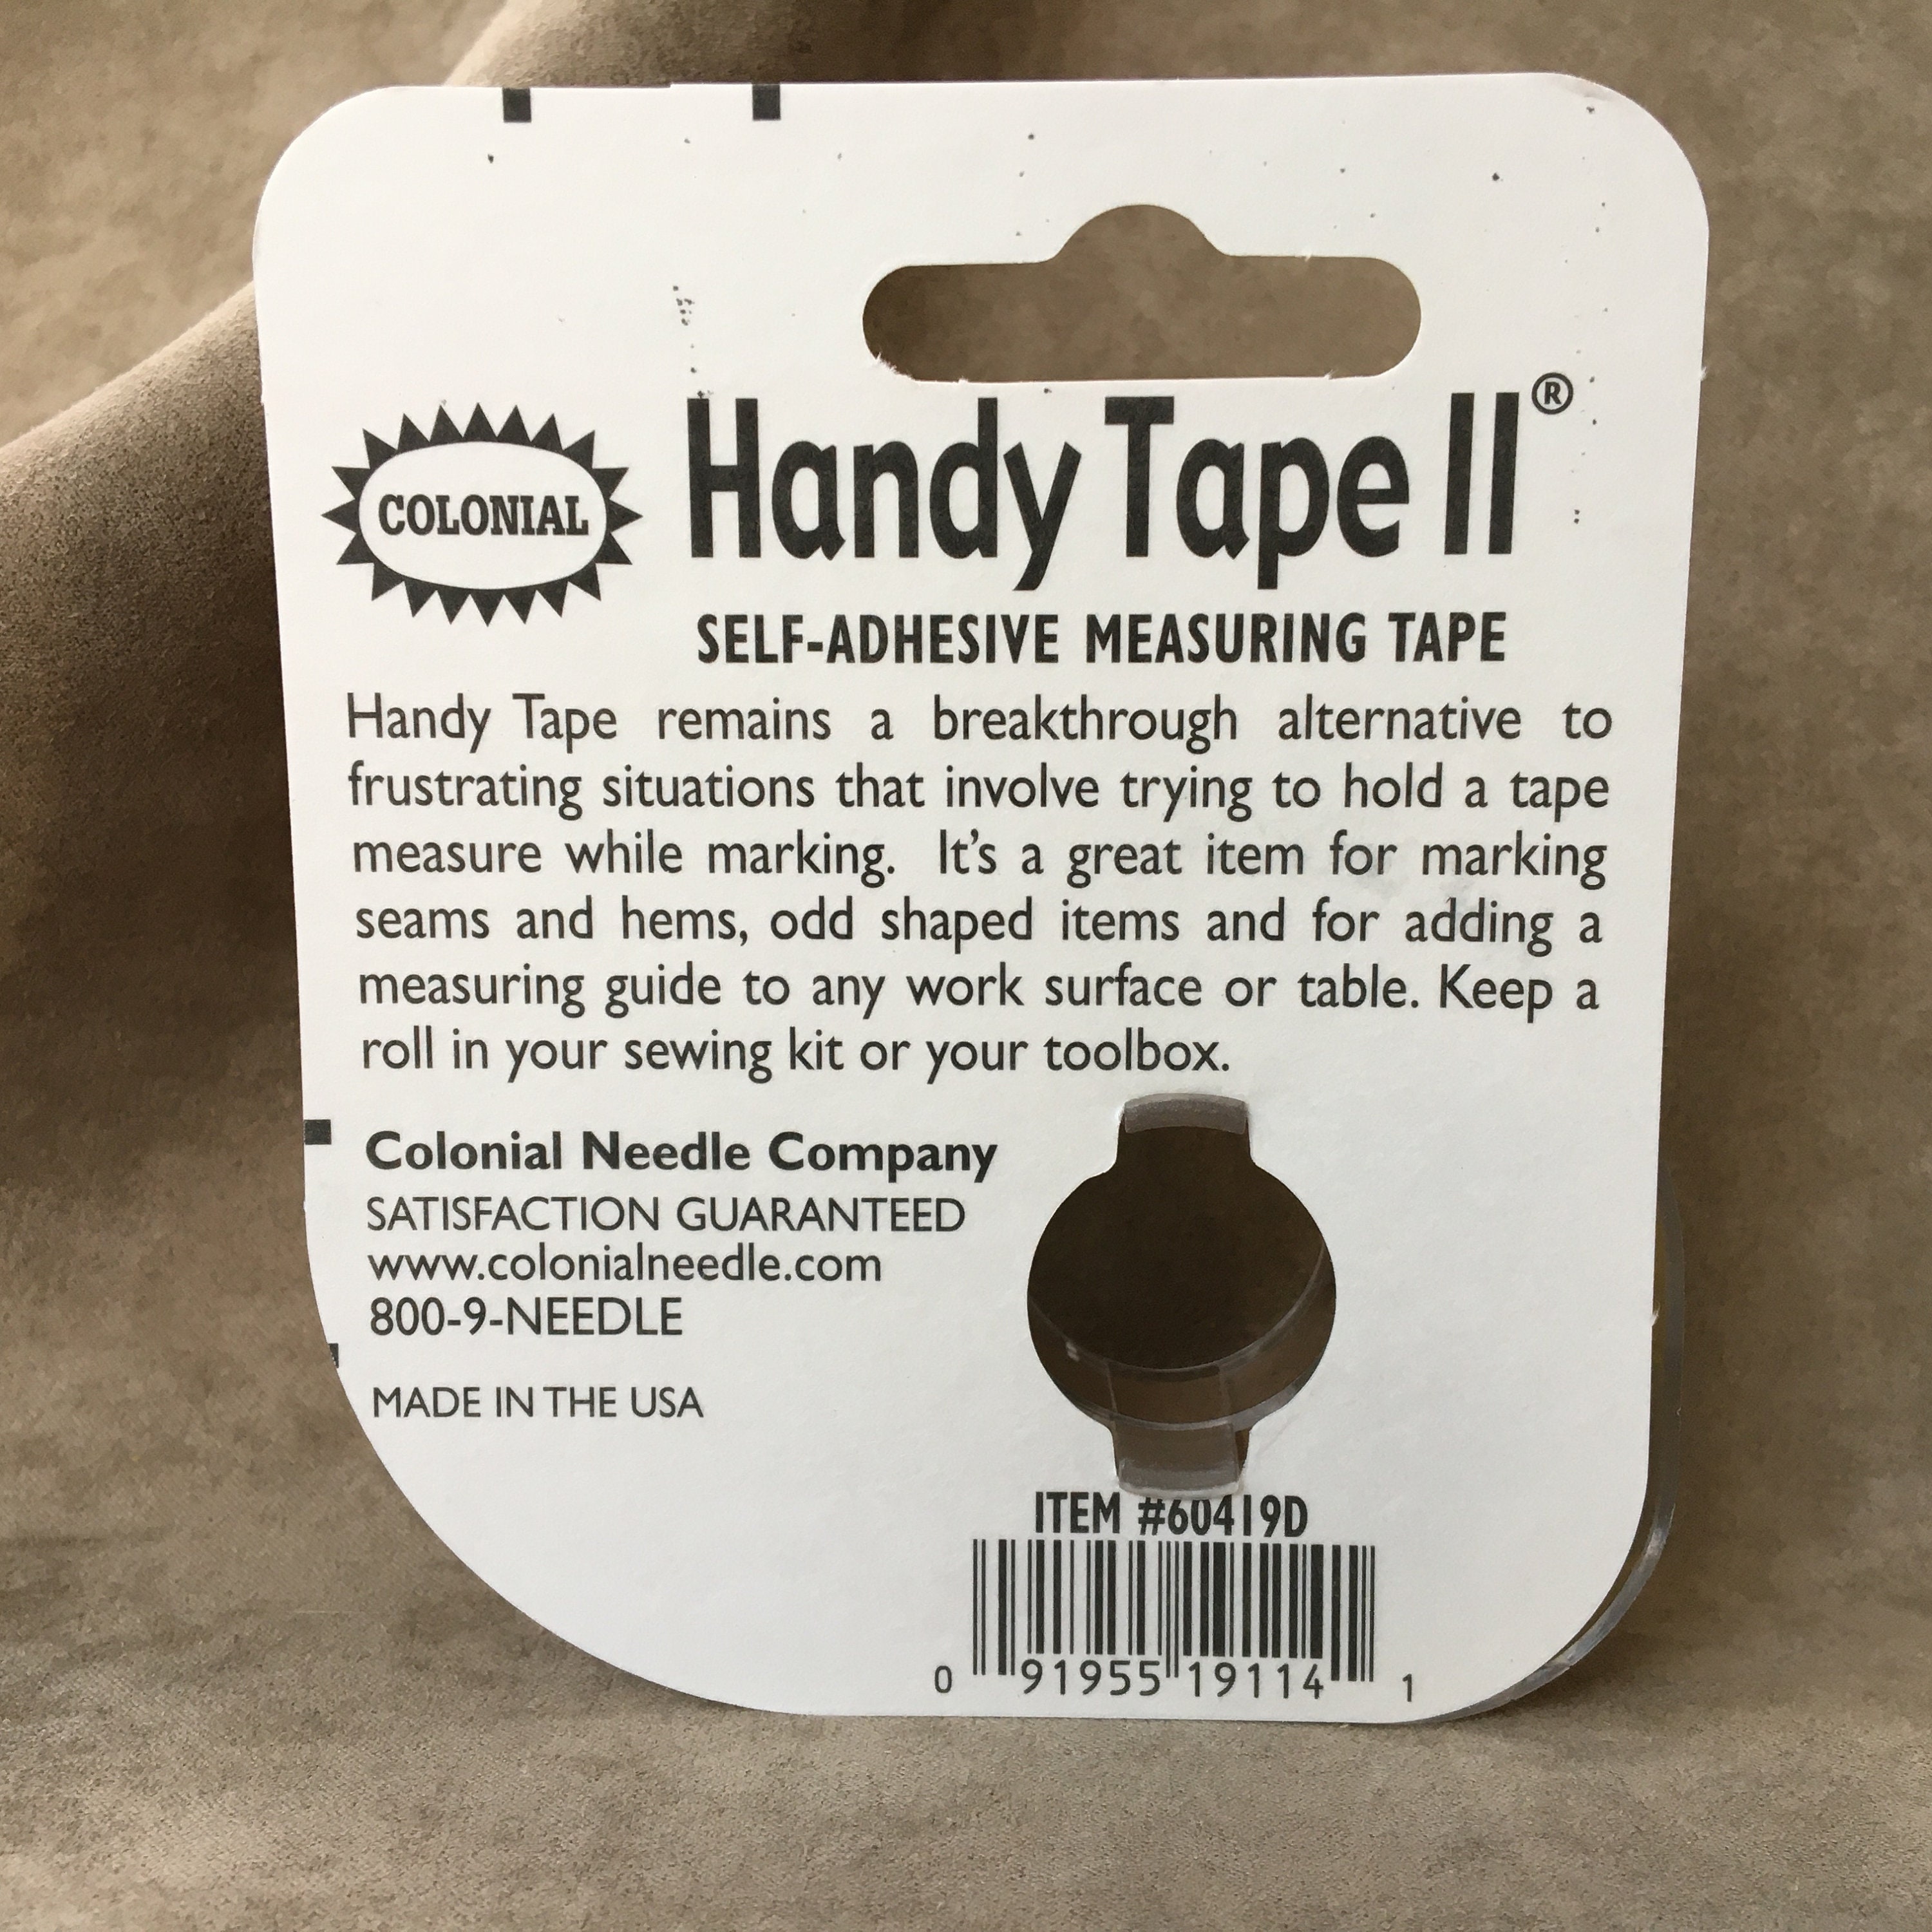 Handy Tape II Self-Adhesive Measuring Tape, 25' x 3/4 Roll, Made in USA!